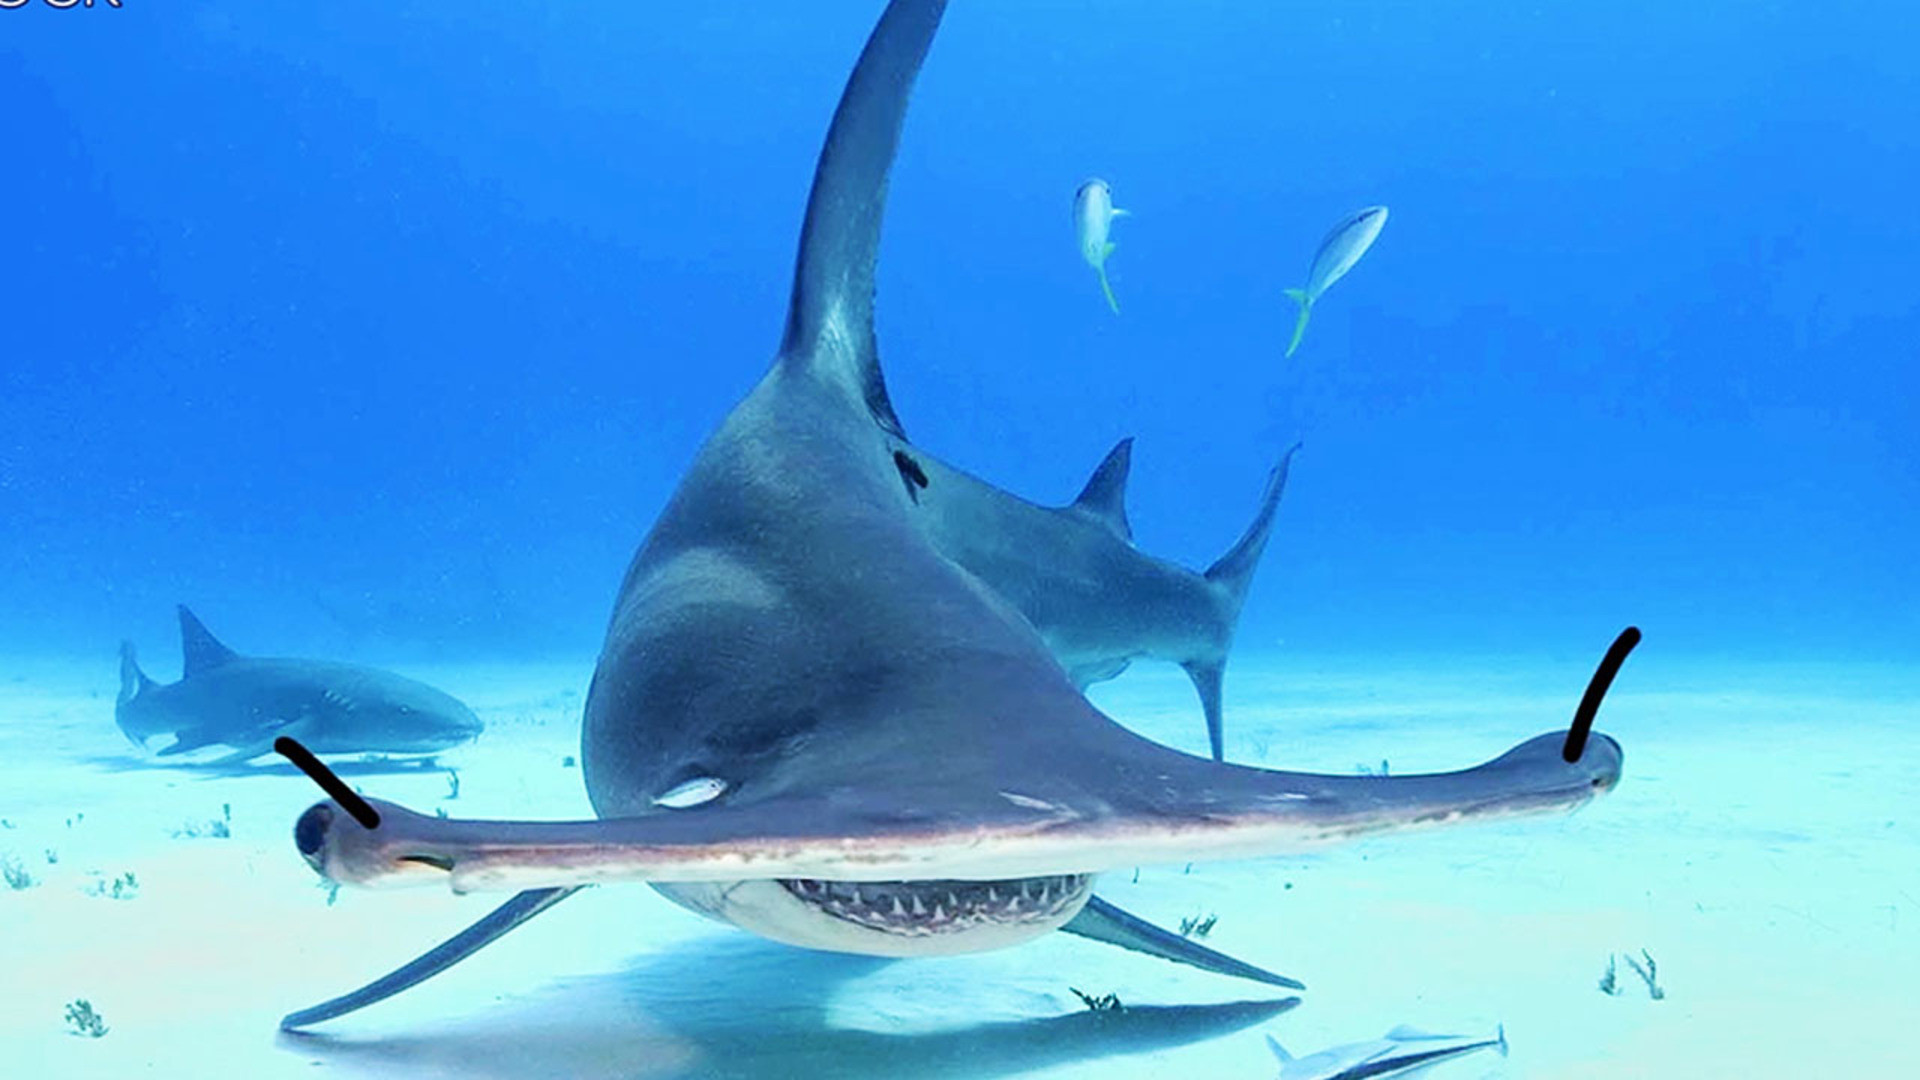 Hammerhead Shark Pictures  Download Free Images on Unsplash